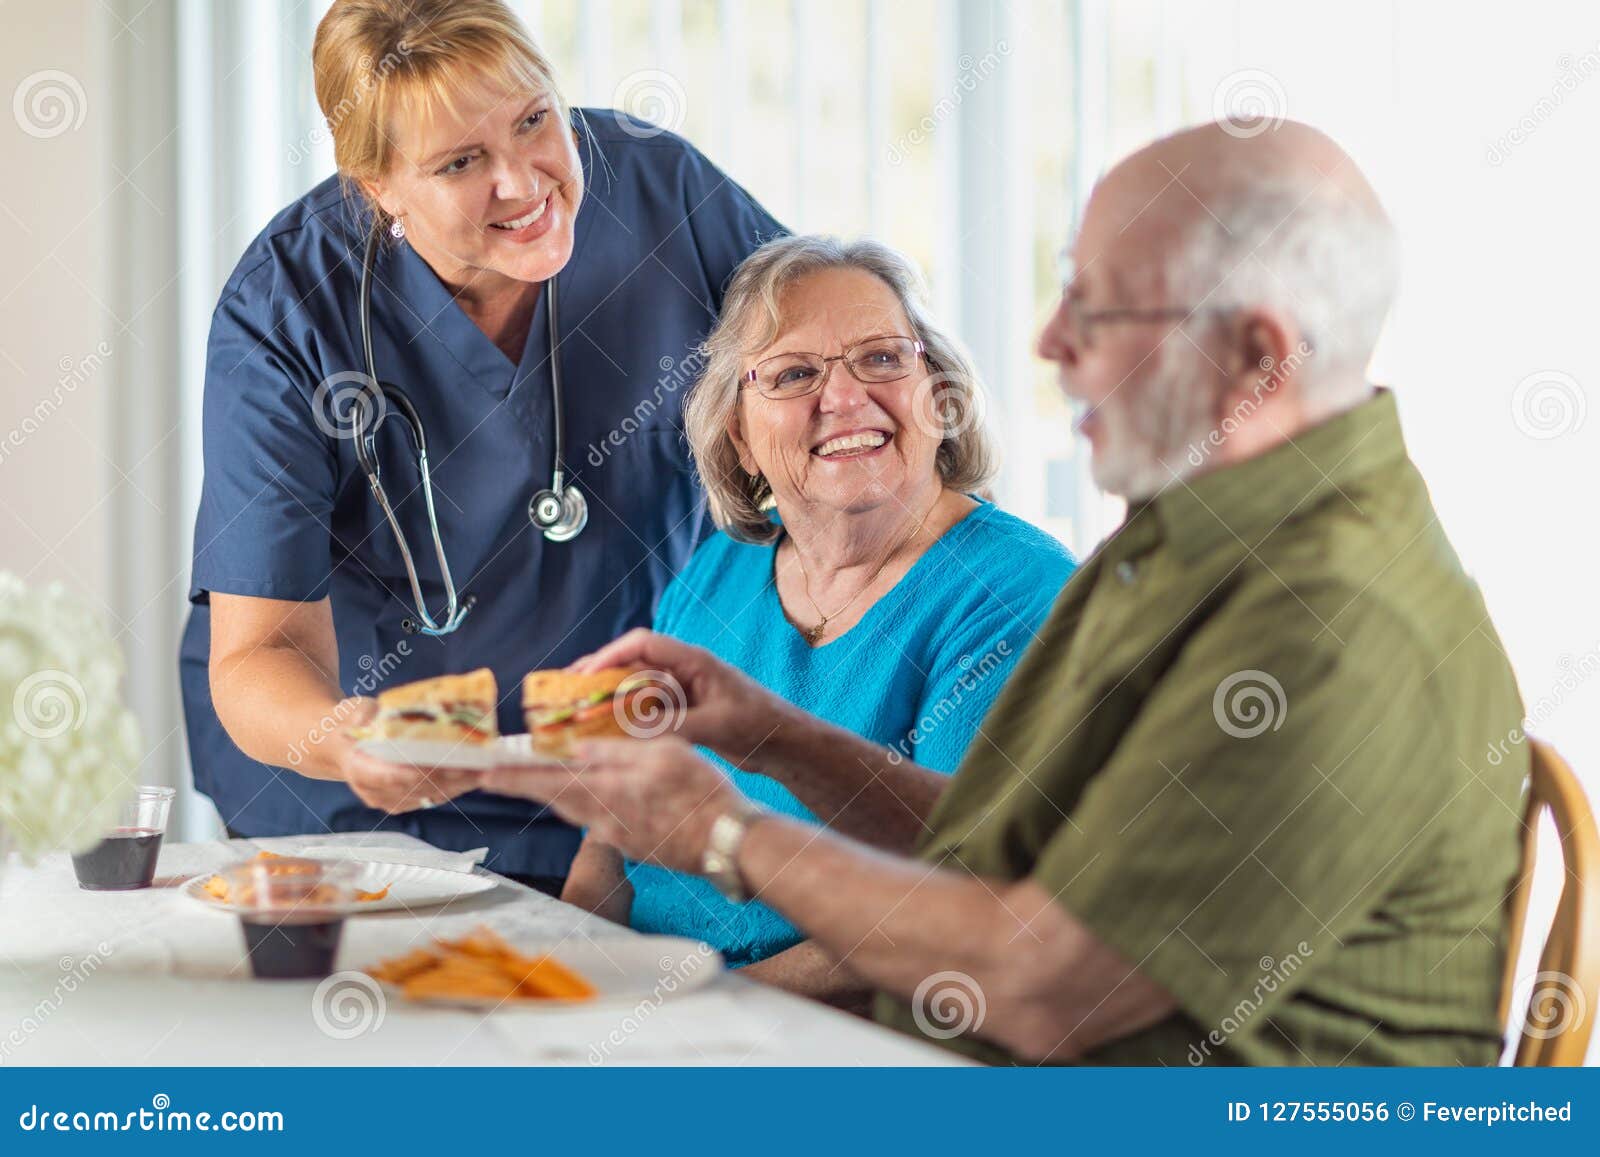 Female Doctor Or Nurse Serves Senior Adult Couple Sandwiche